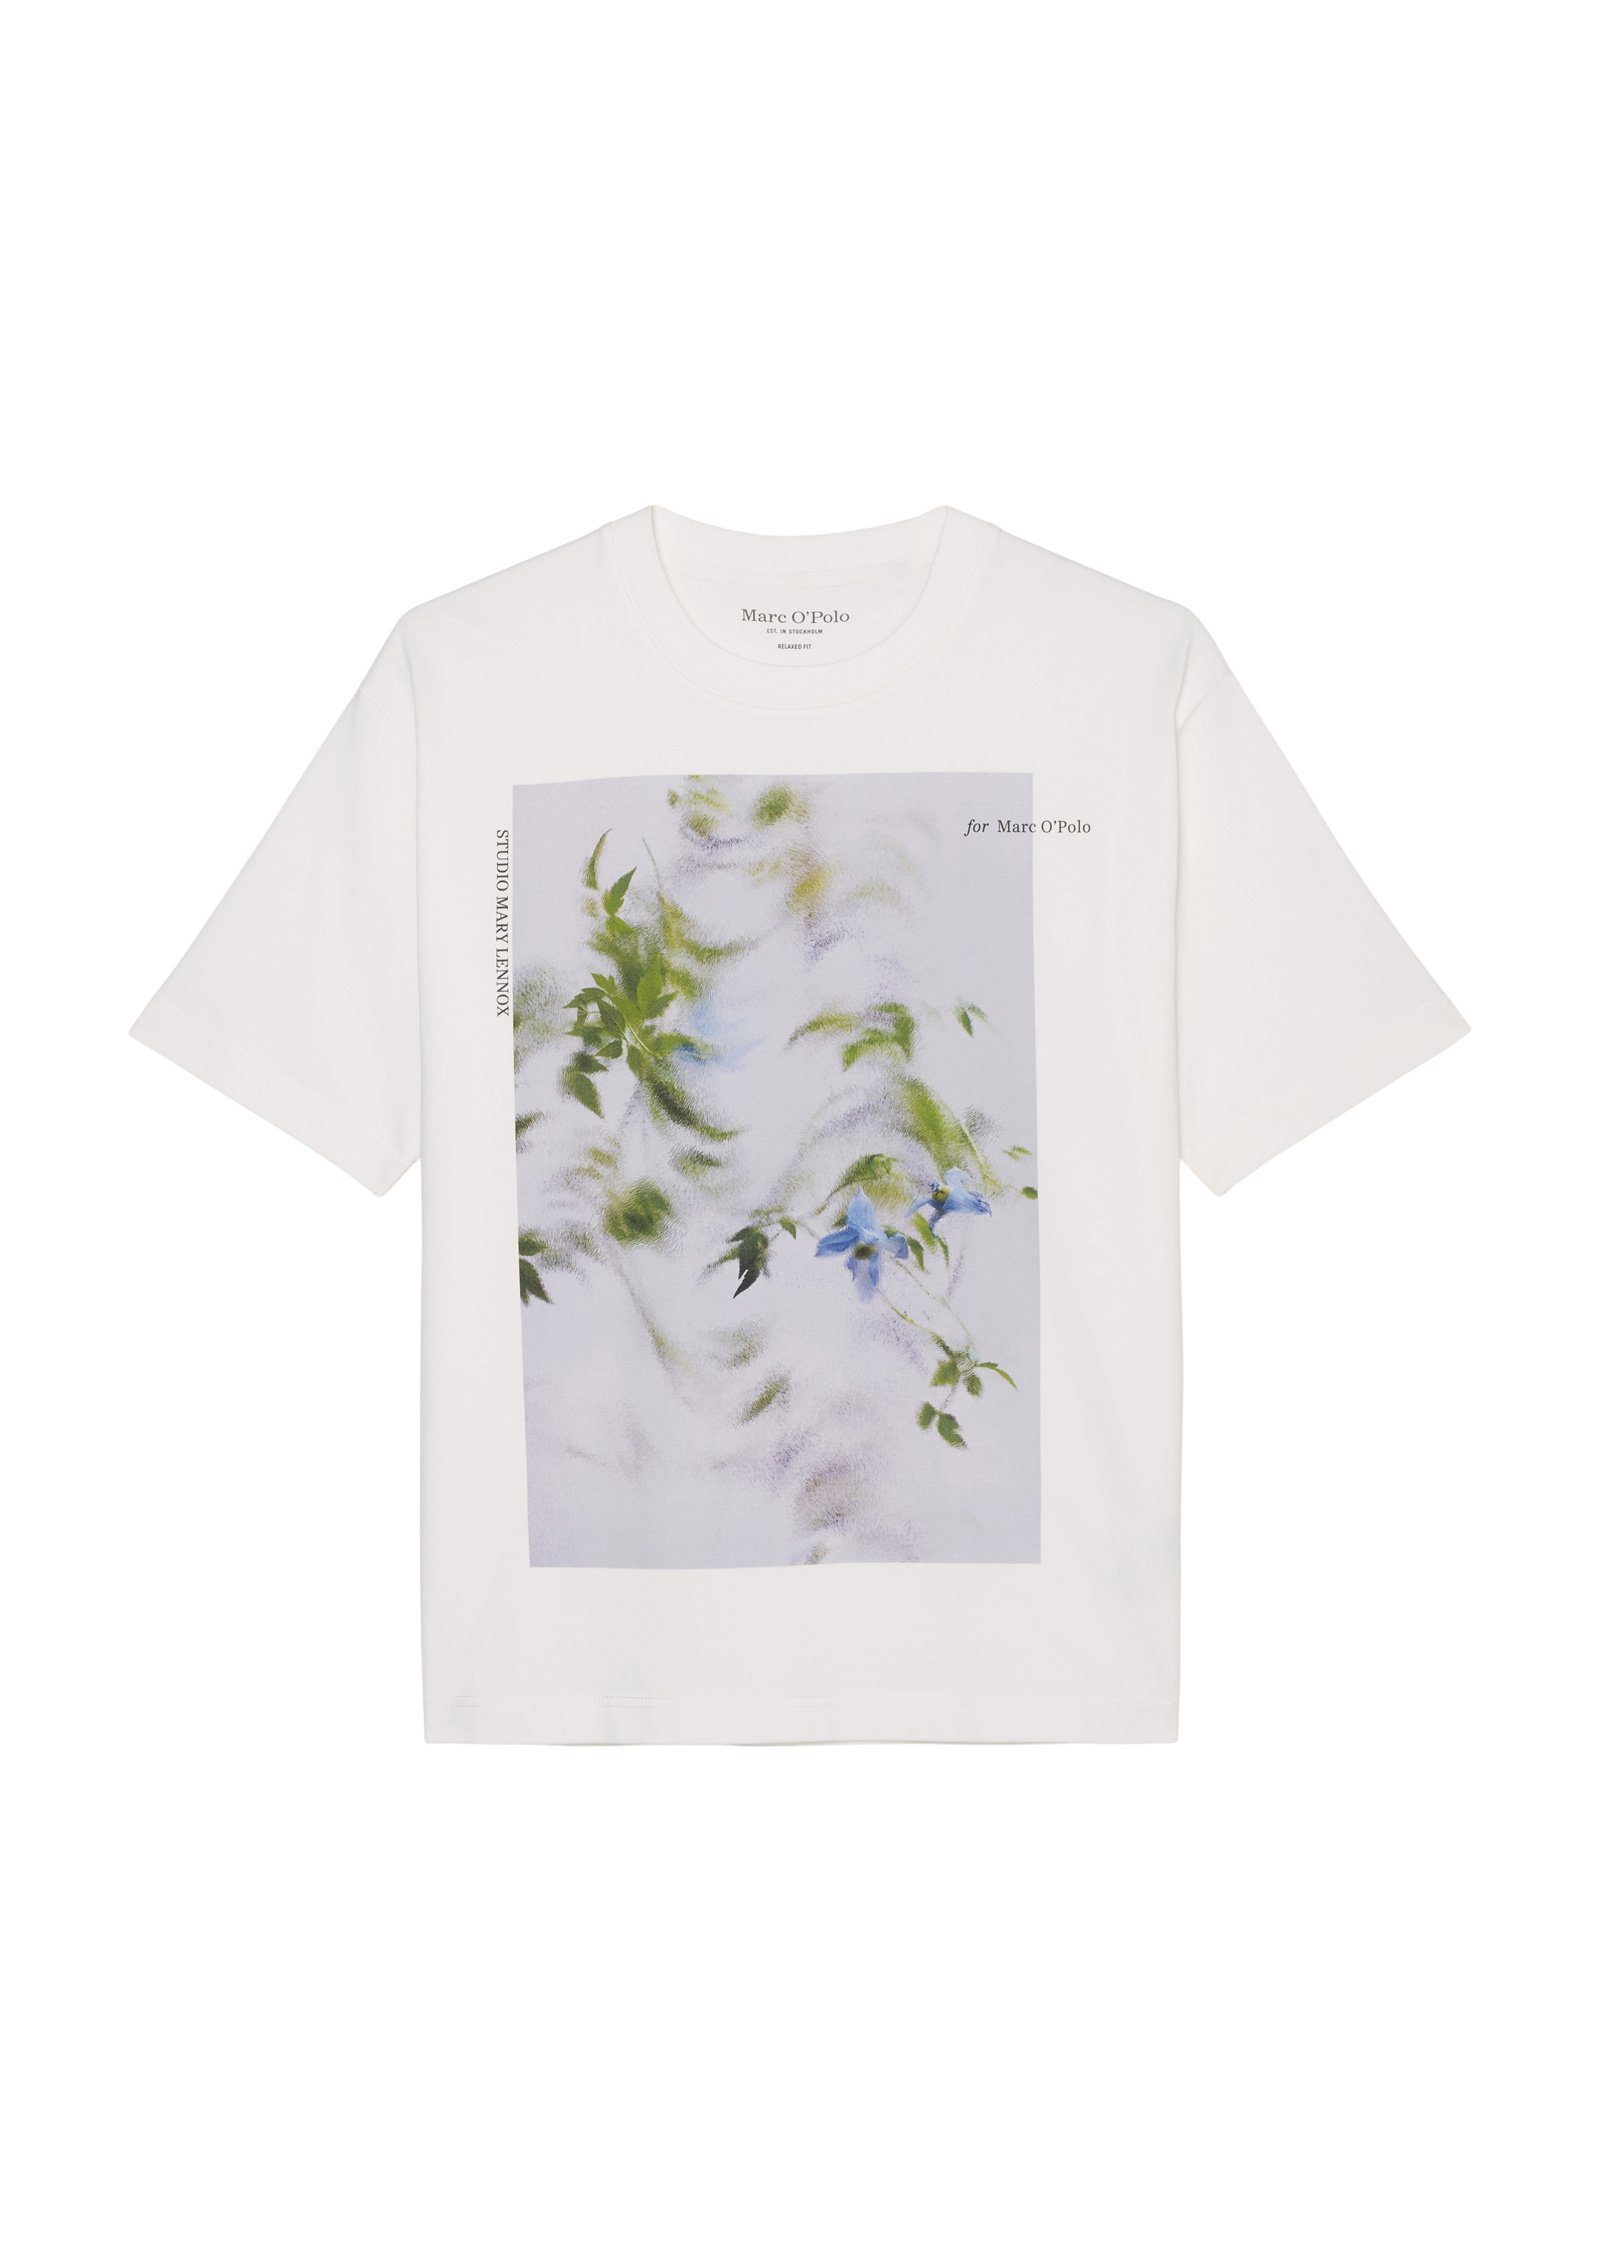 T-Shirt Marc weiß mit Frontprint O'Polo floralem